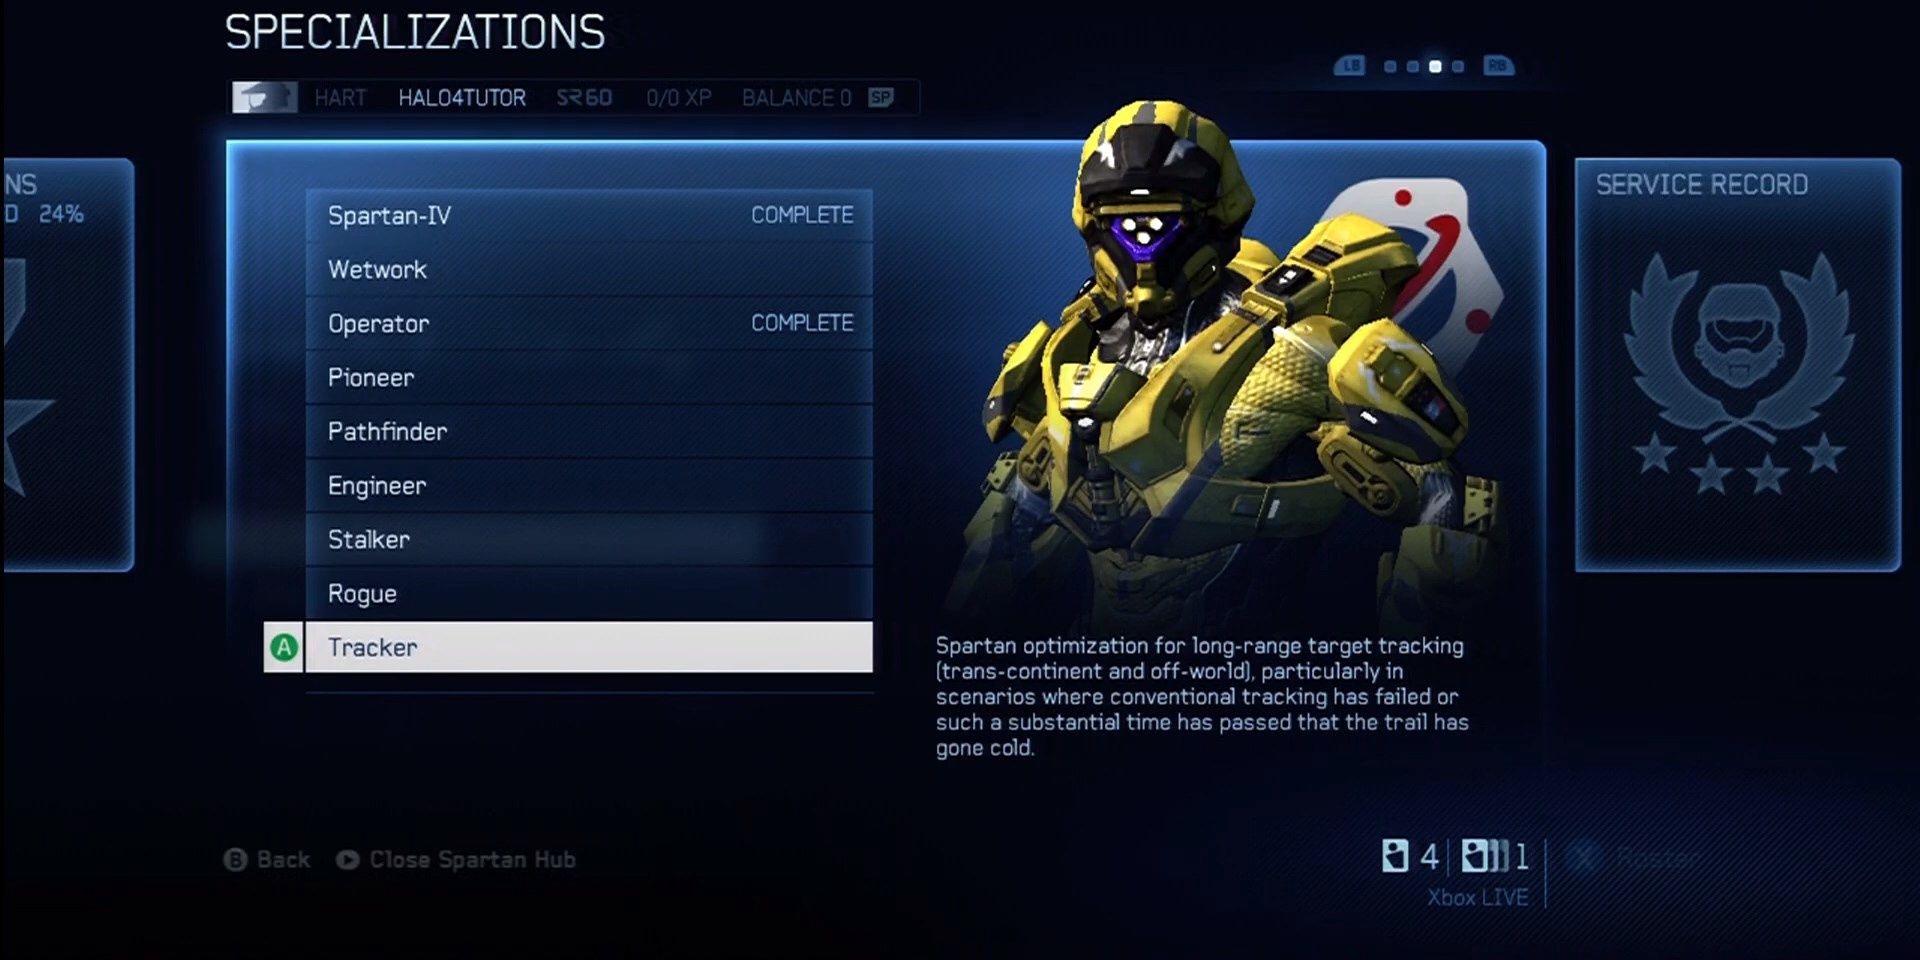 Halo 4 Tracker Specialization